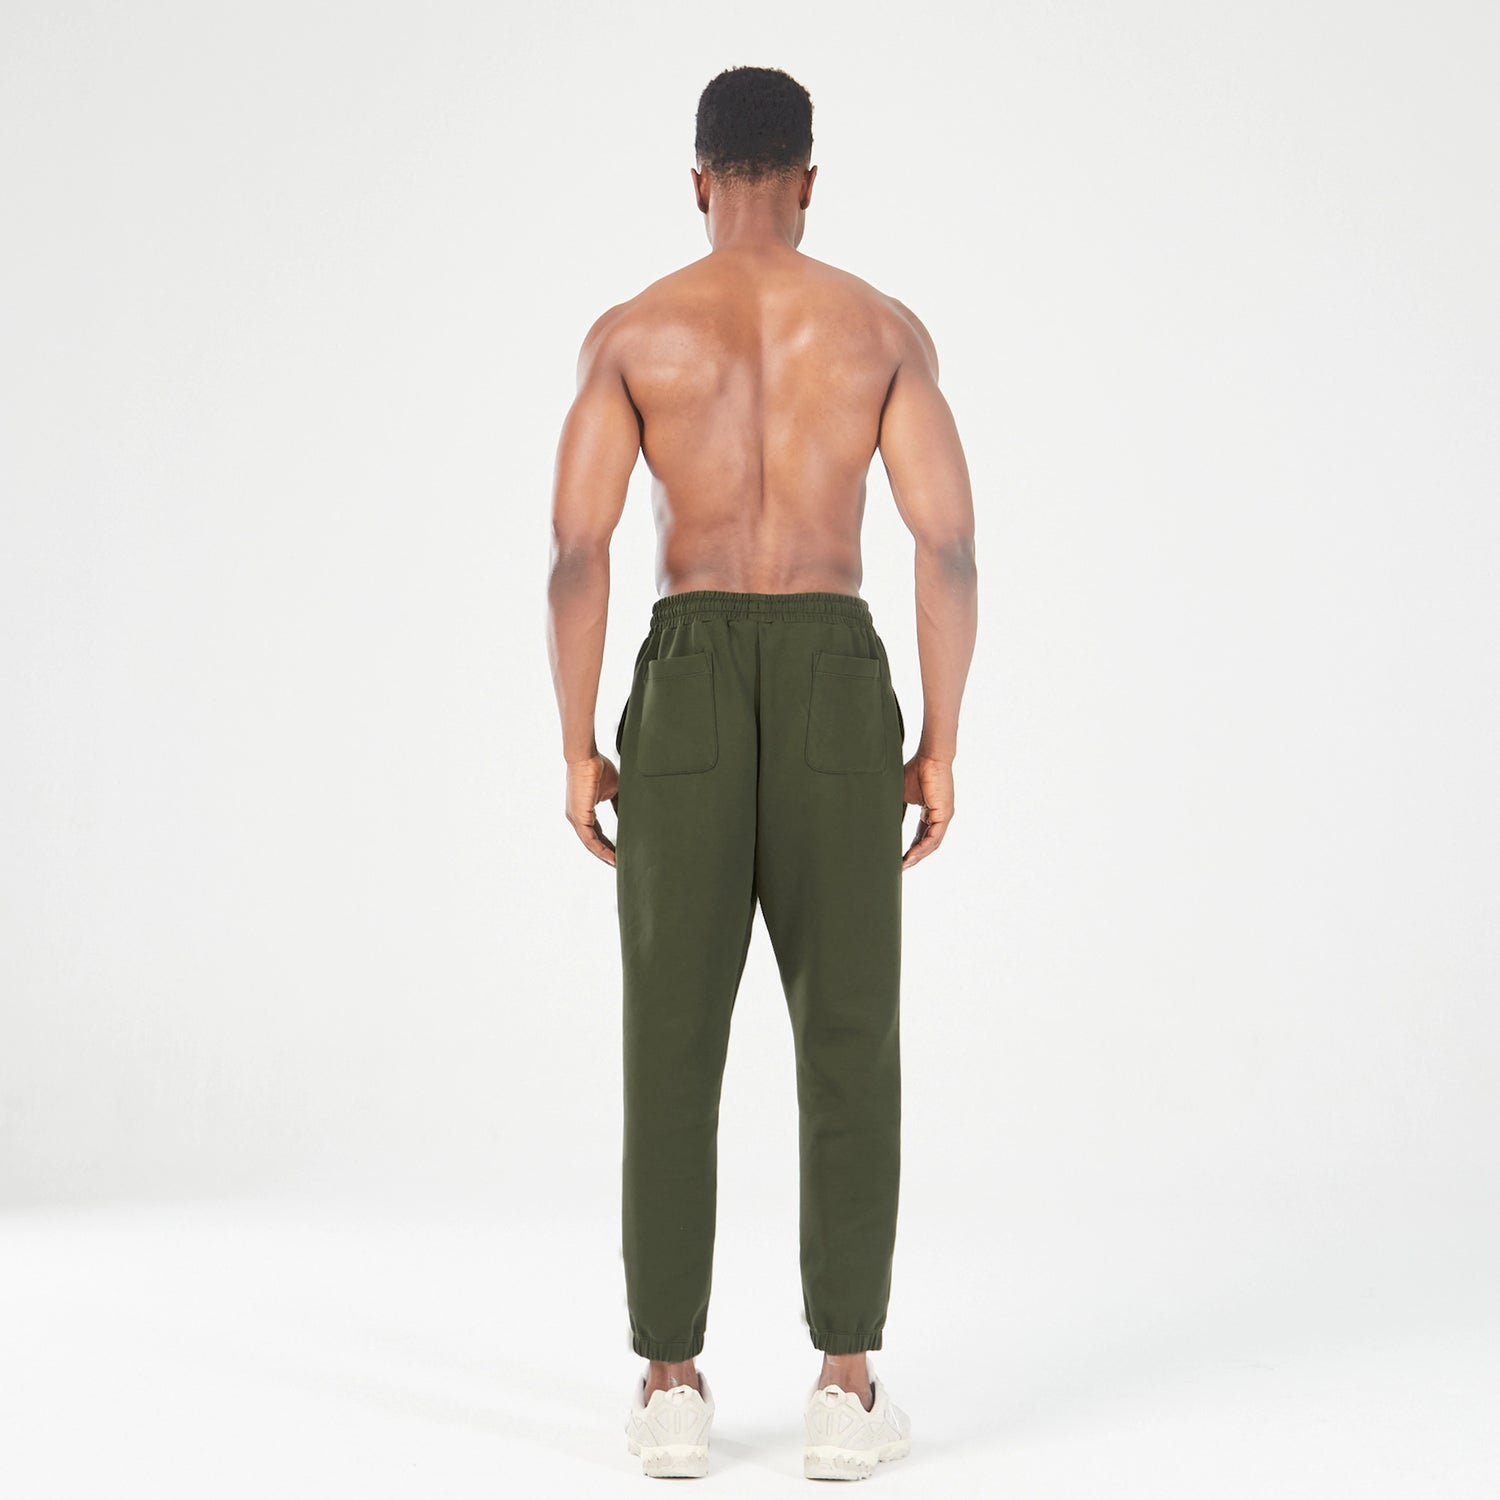 squatwolf-gym-wear-core-level-up-joggers-kombu-green-workout-pants-for-men